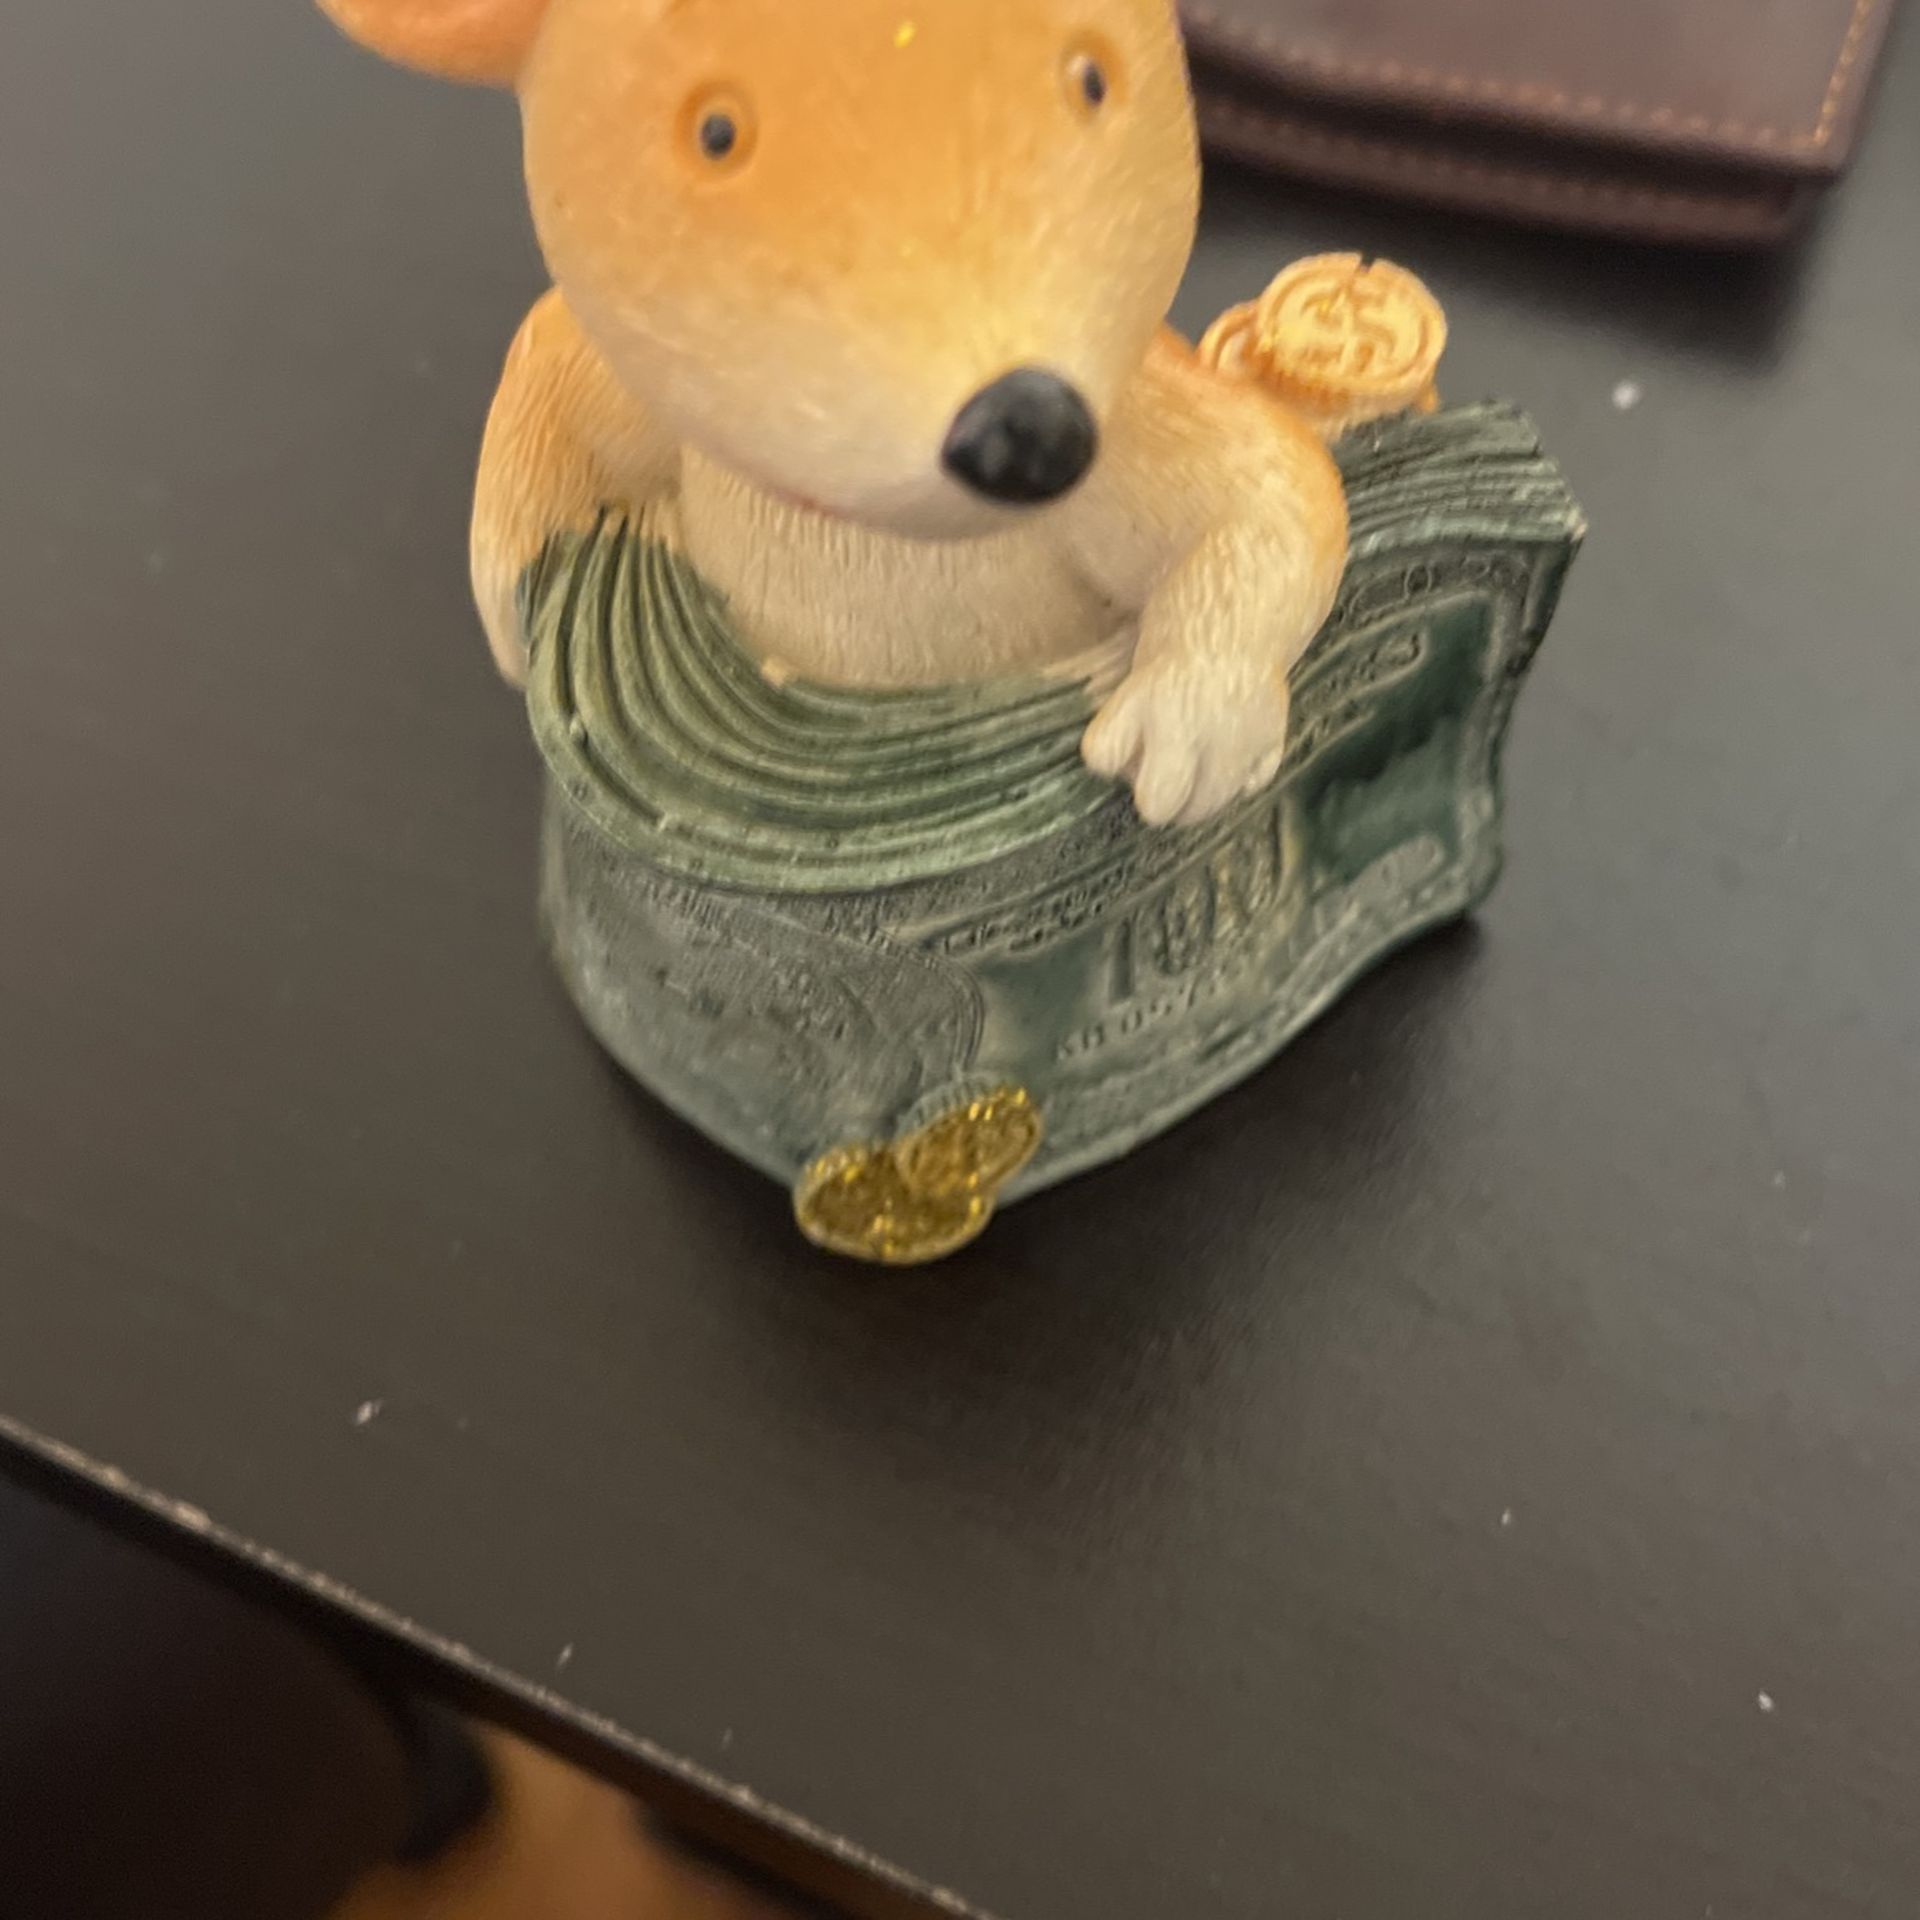 Teddy bear with $100 on it